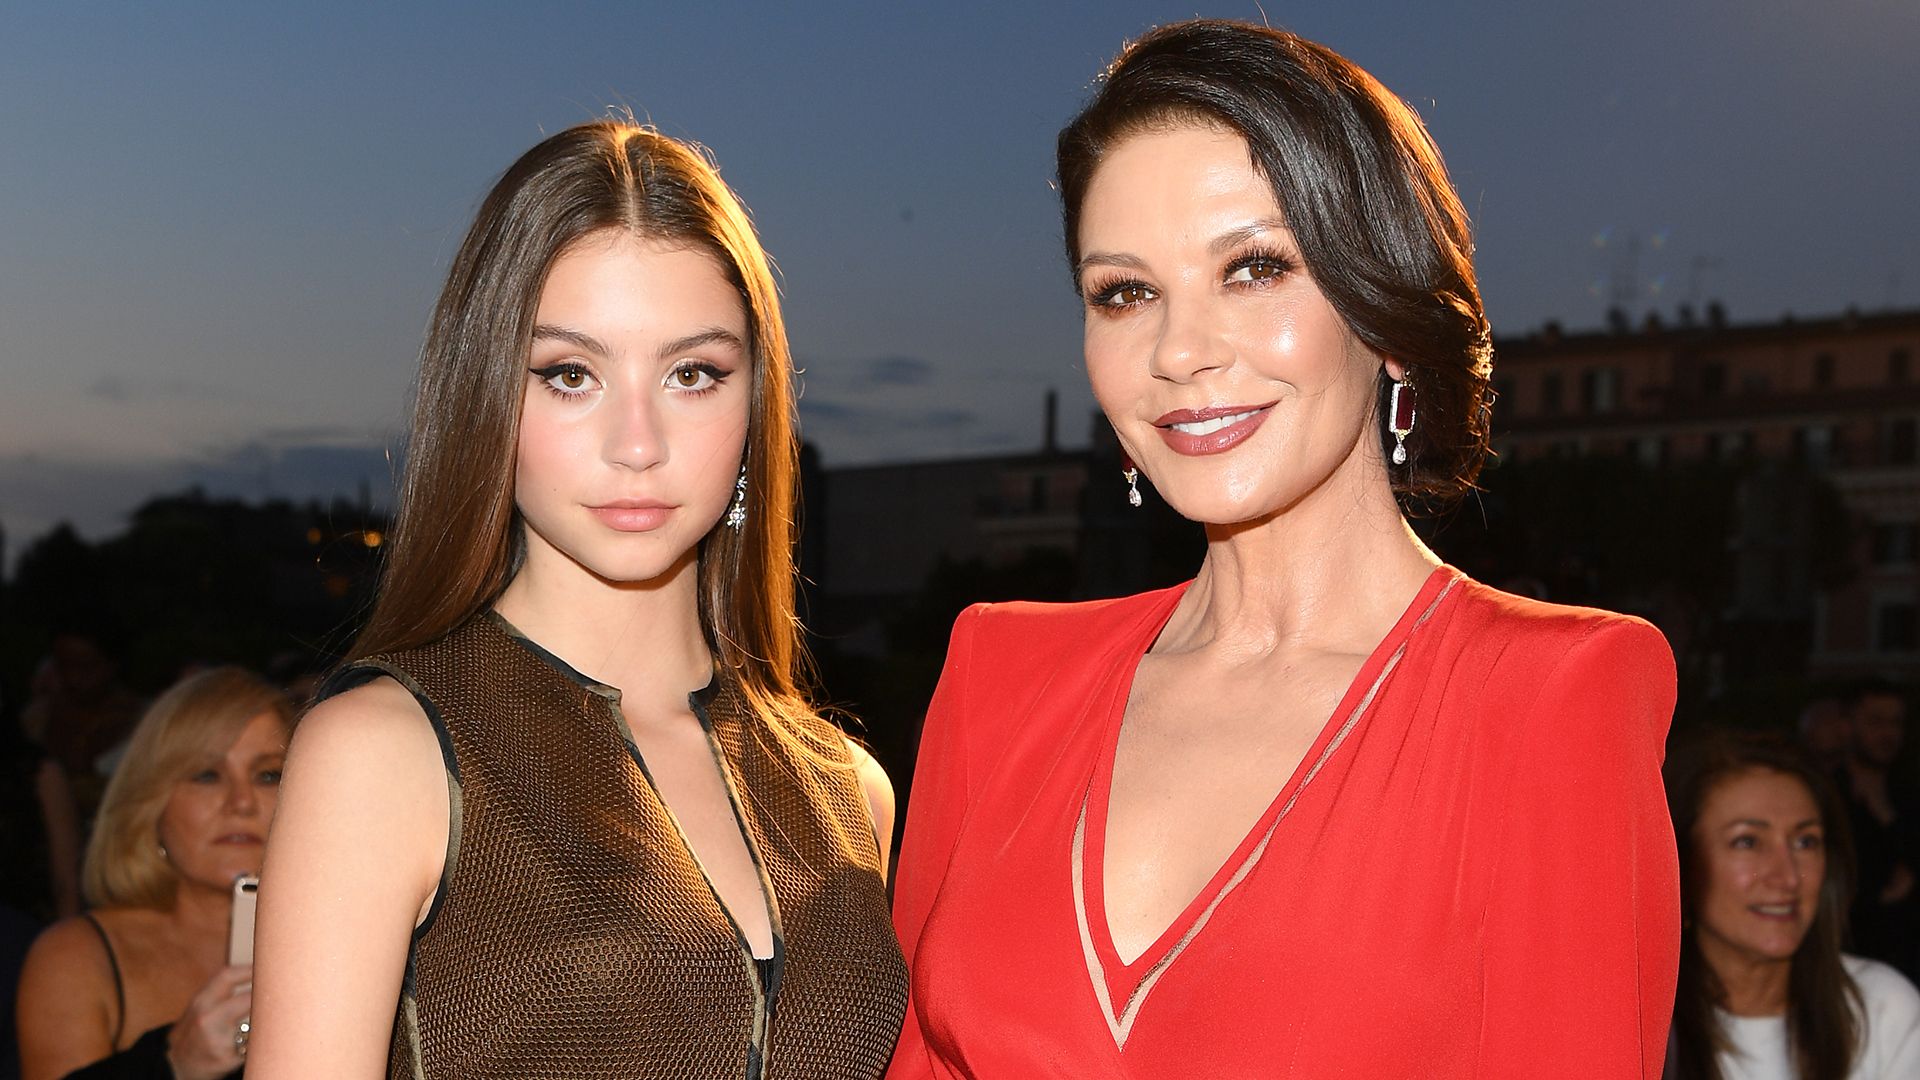 Inside Catherine Zeta-Jones' 'really special' bond with lookalike daughter Carys Douglas